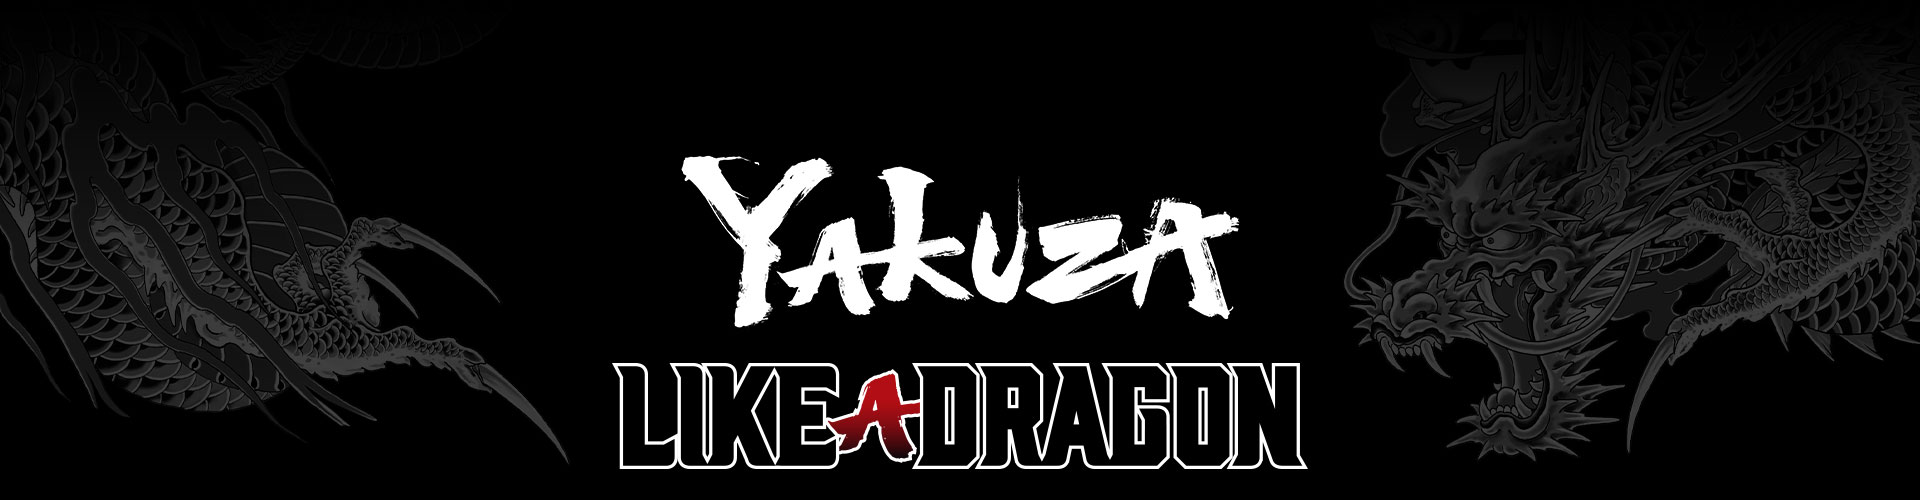 Yakuza Like a Dragon franchise logo with a stylised grey dragon tattoo background.